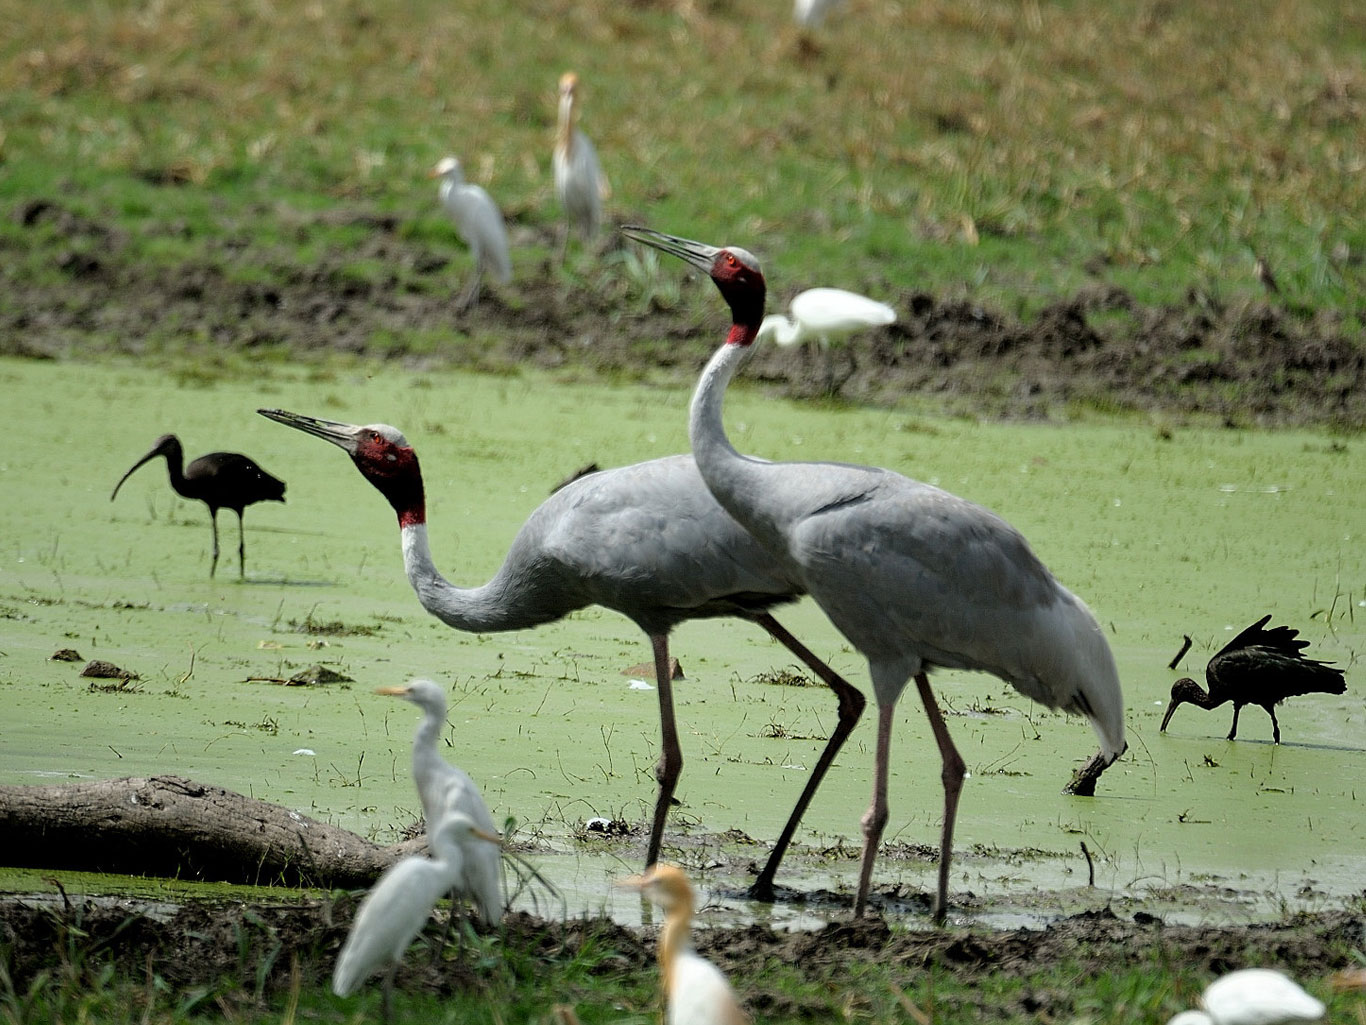 Birds at Keoladeo Ghana National Park